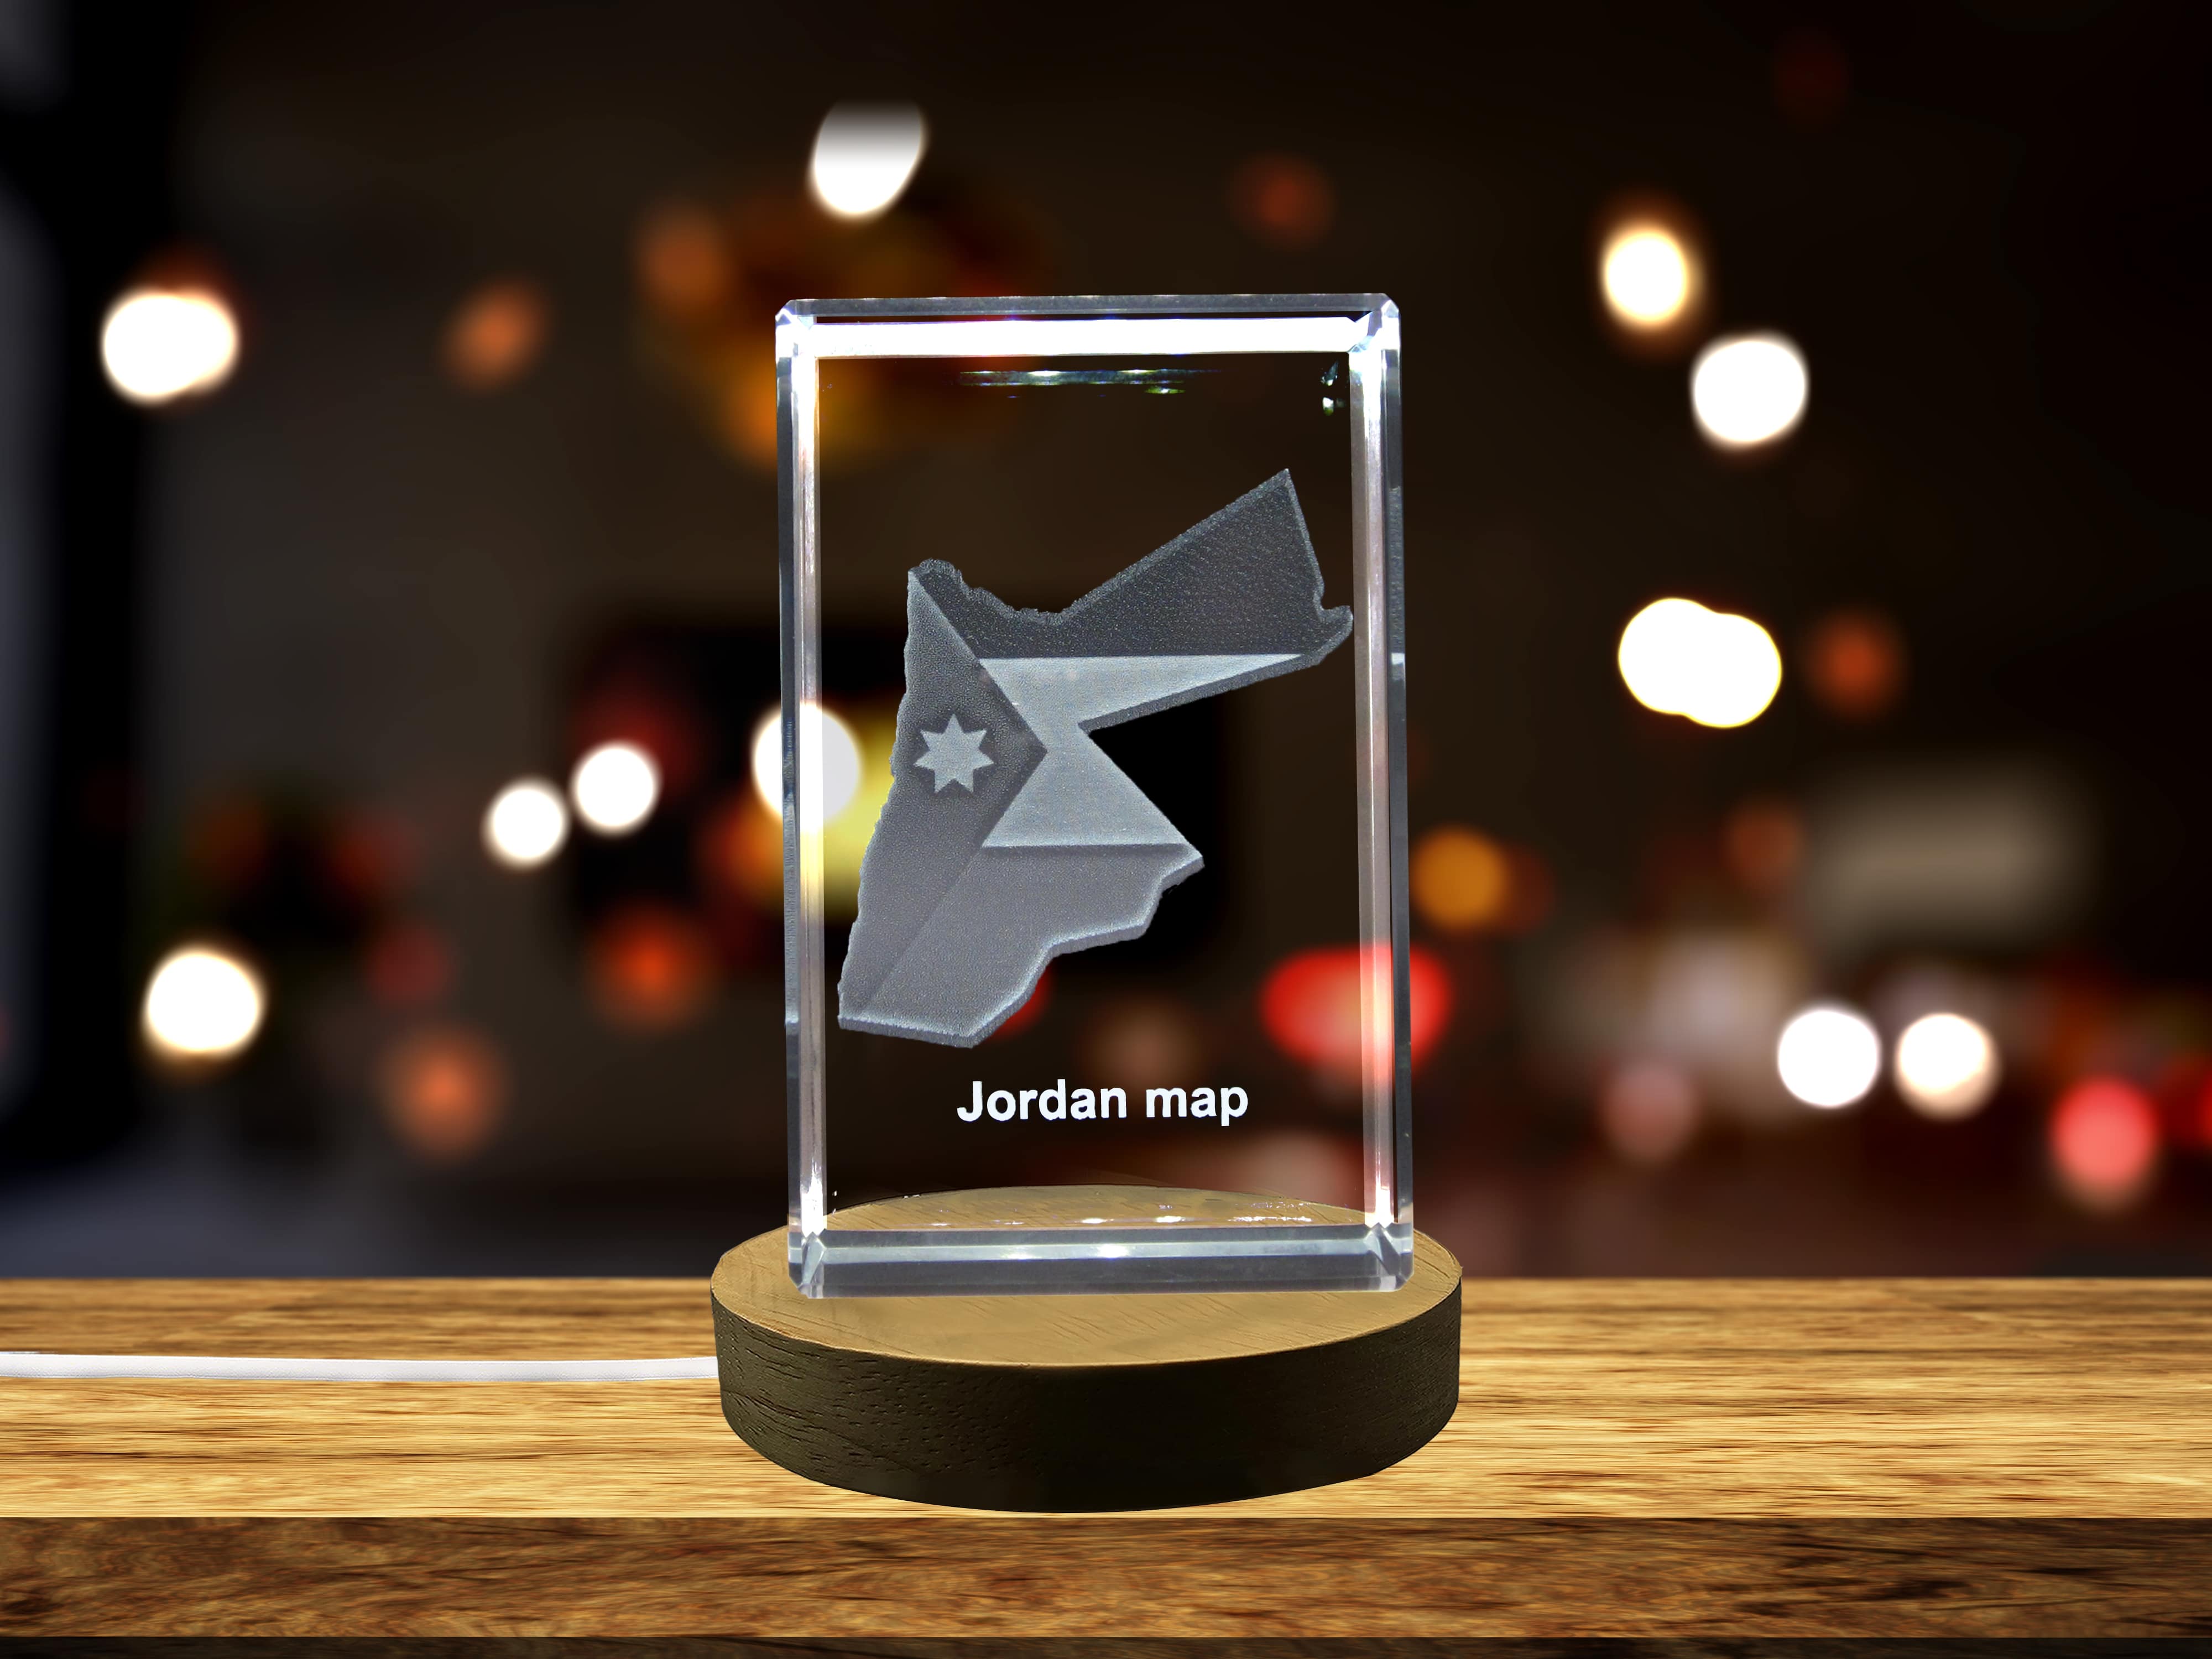 Jordan 3D Engraved Crystal 3D Engraved Crystal Keepsake/Gift/Decor/Collectible/Souvenir A&B Crystal Collection